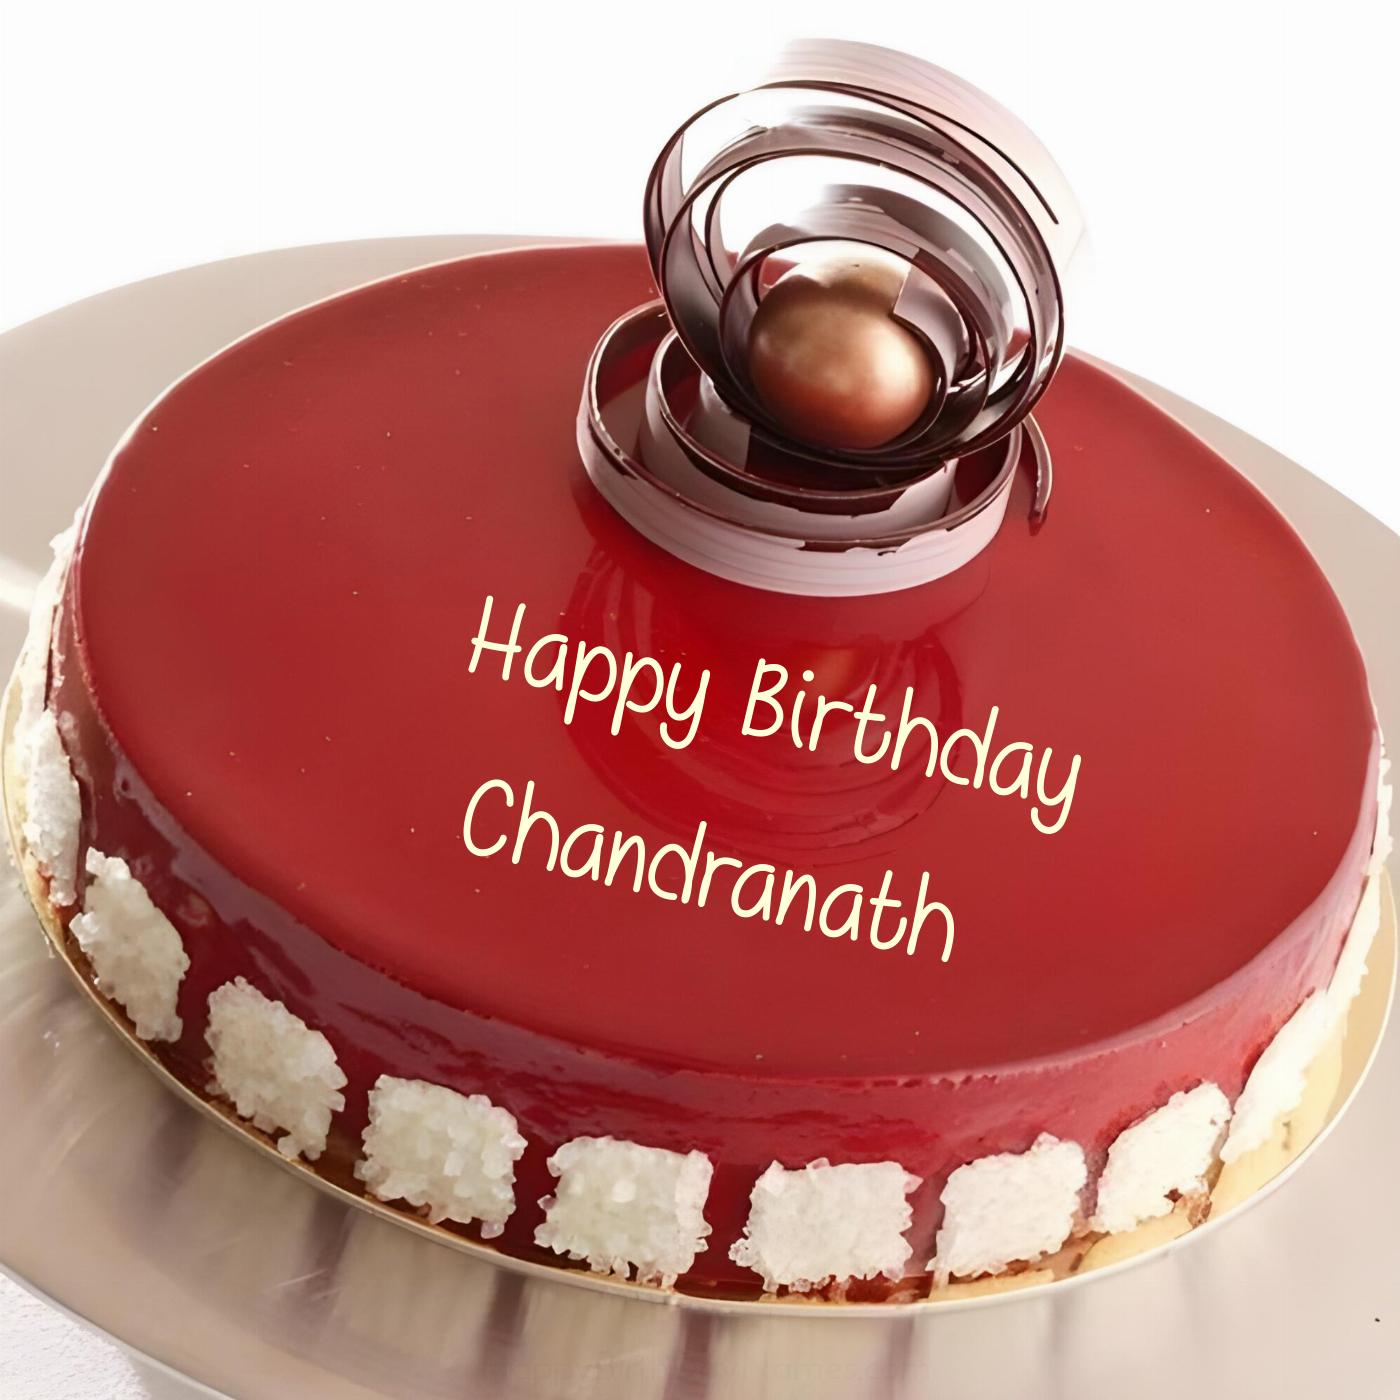 Happy Birthday Chandranath Beautiful Red Cake